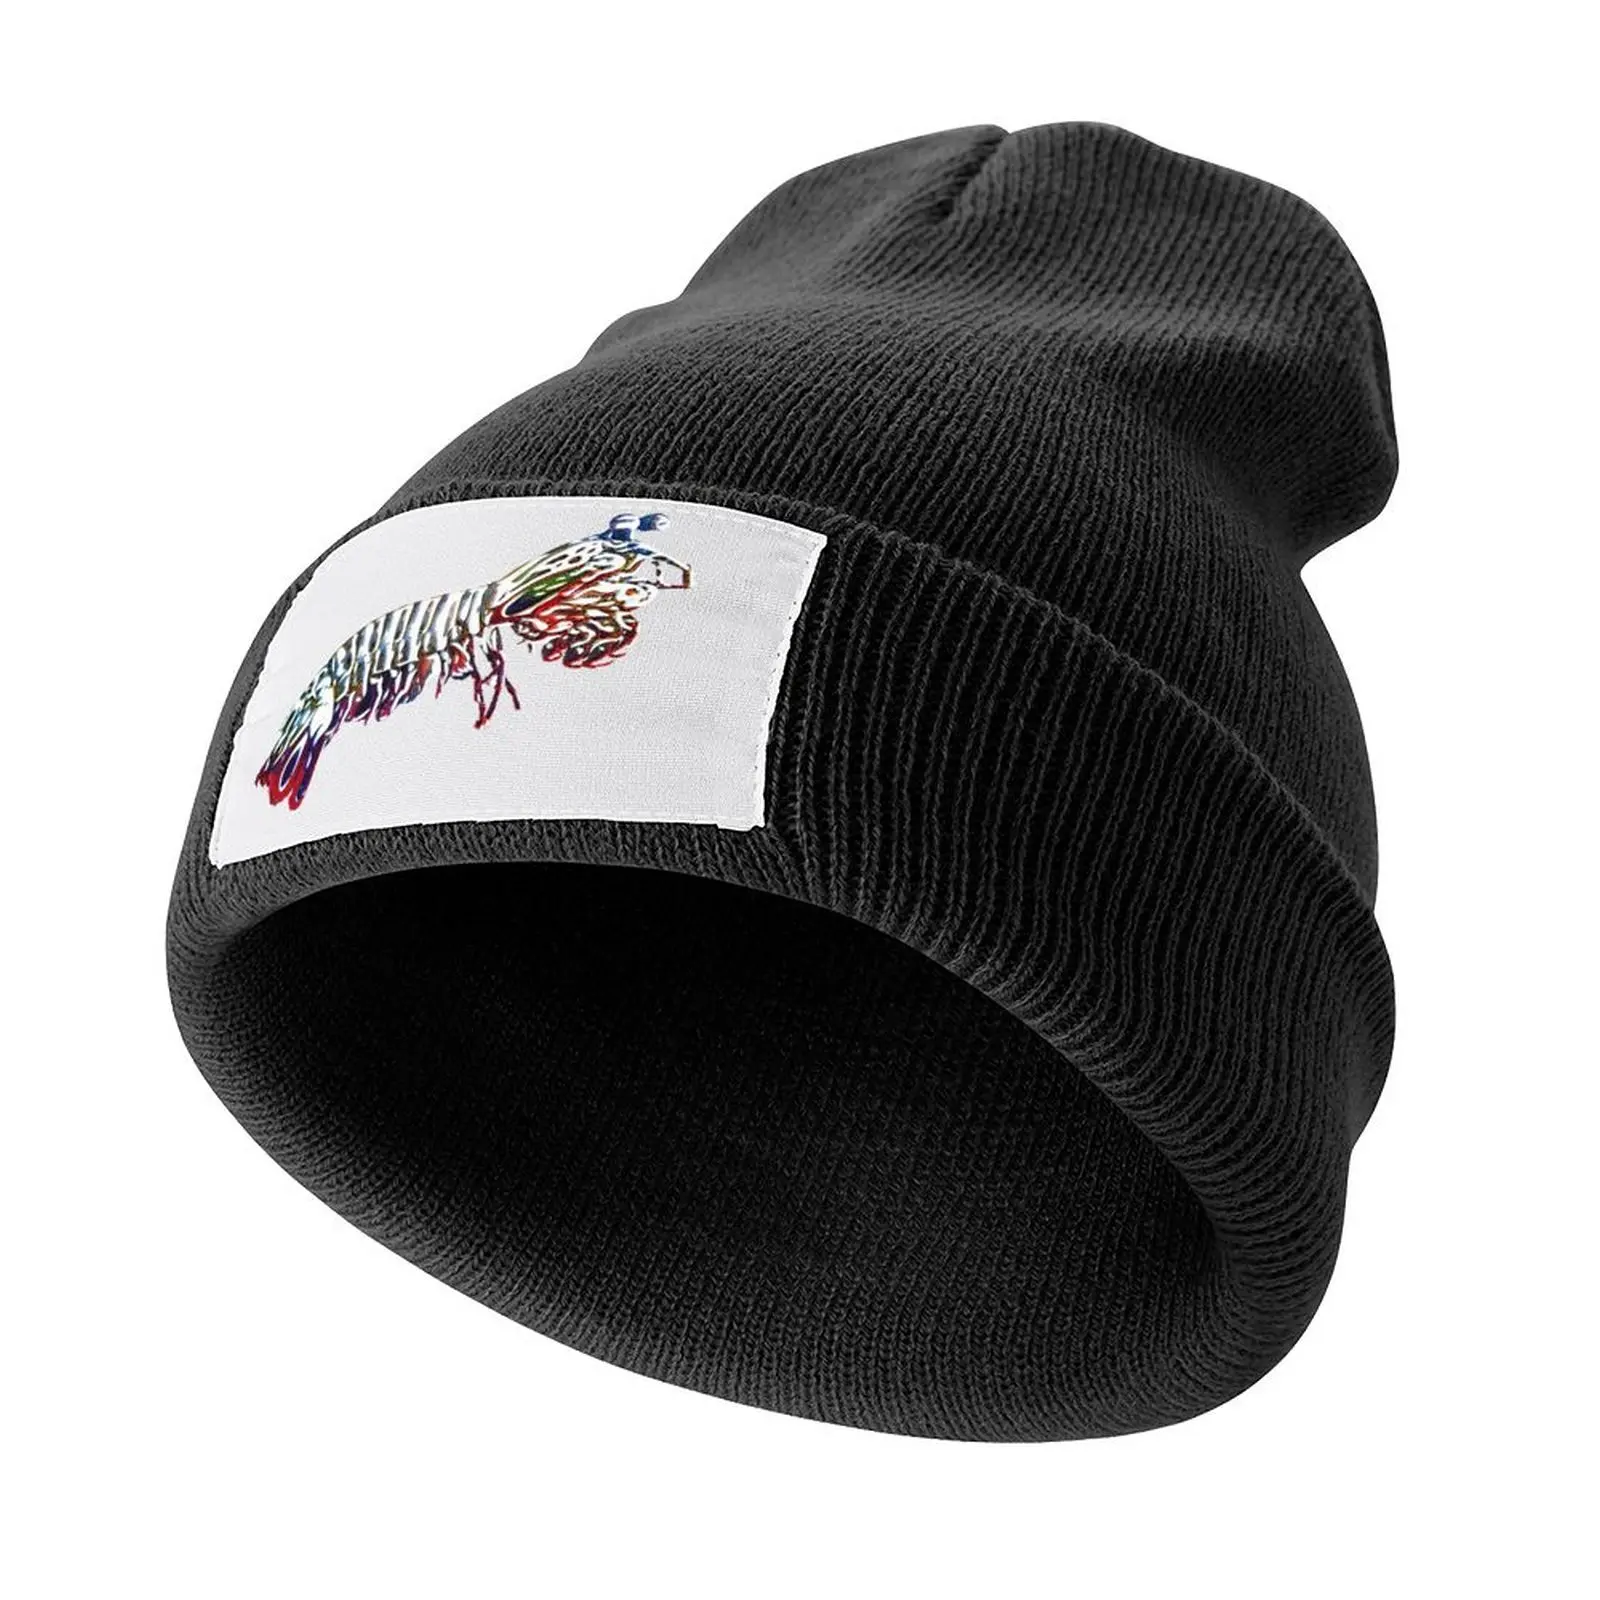 

Mantis Shrimp White Alternate DesignCap Knitted Cap Snap Back Hat foam party hats Hip Hop Baseball Cap For Men Women's